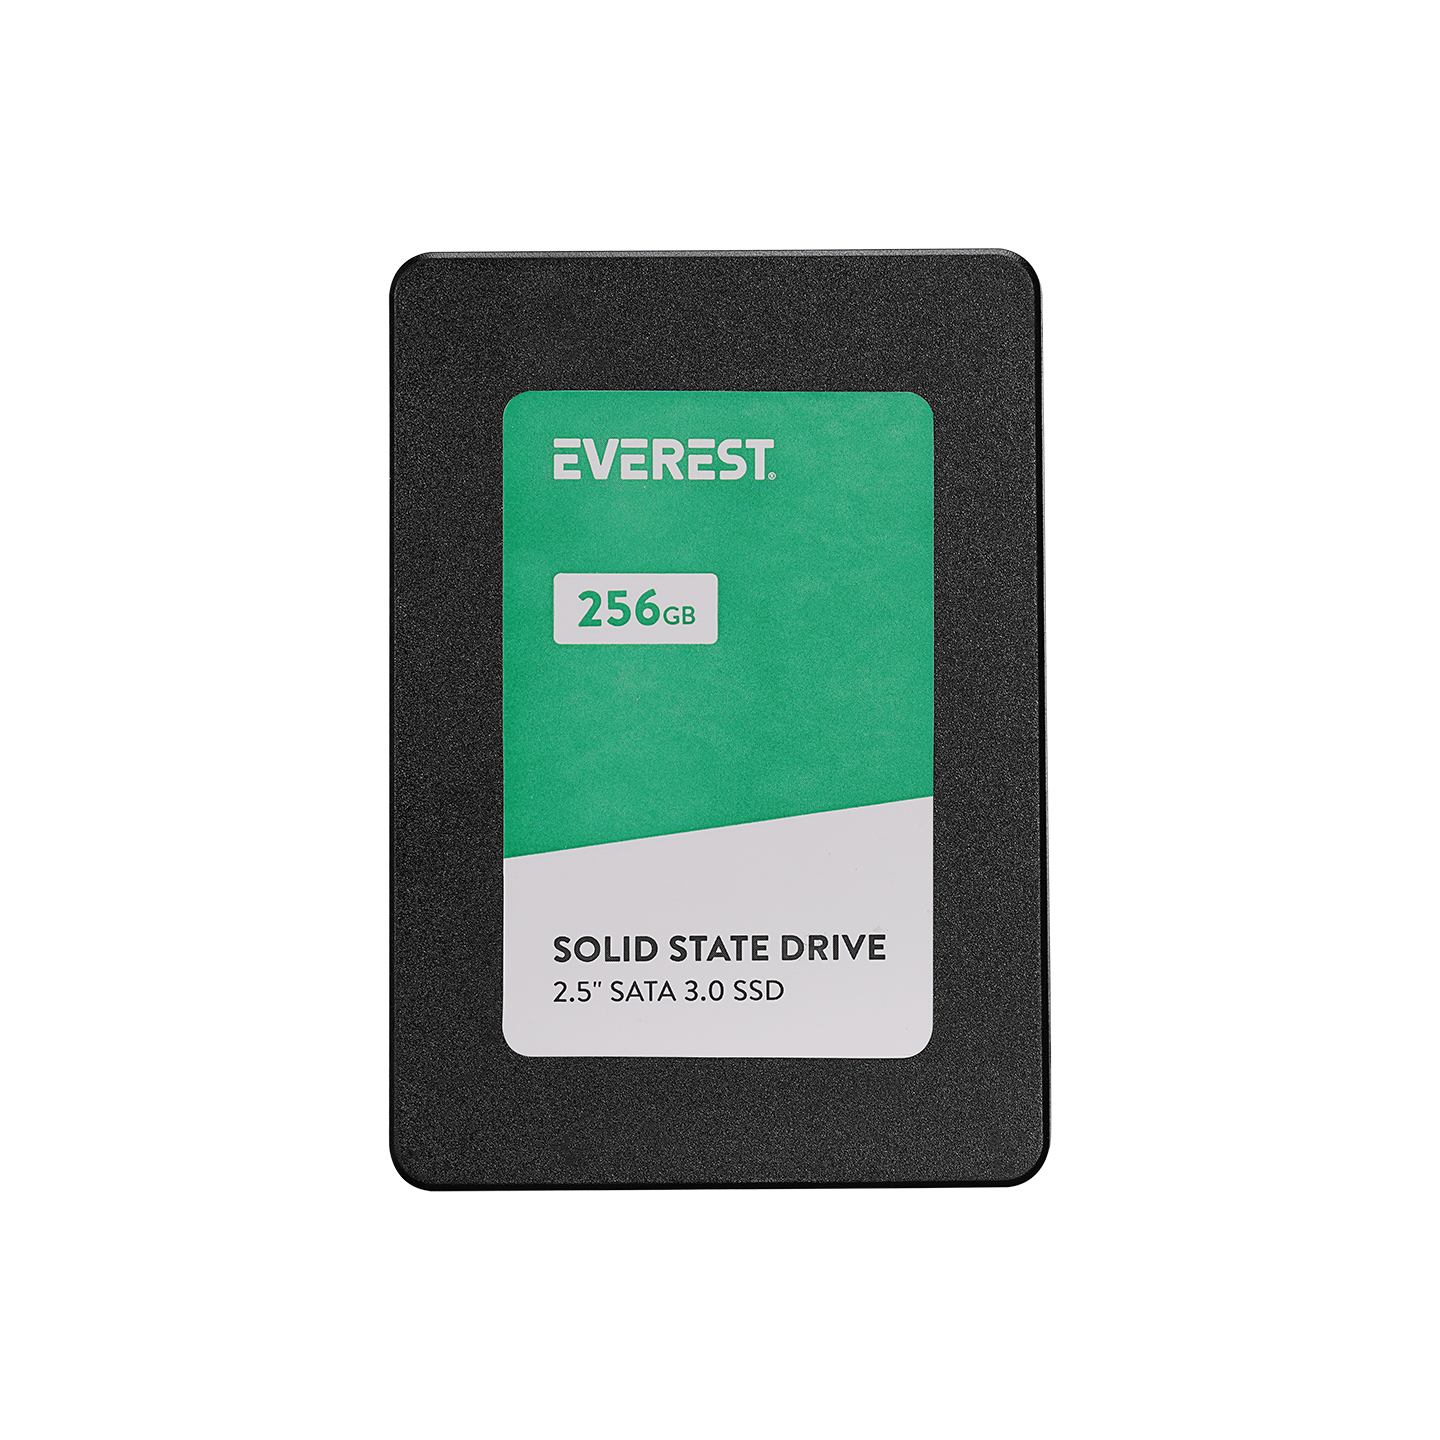 Everest ES256A 256GB 2.5 SATA3.0 520MB/460MB 3D NAND Flash SSD (Solid State Drive)